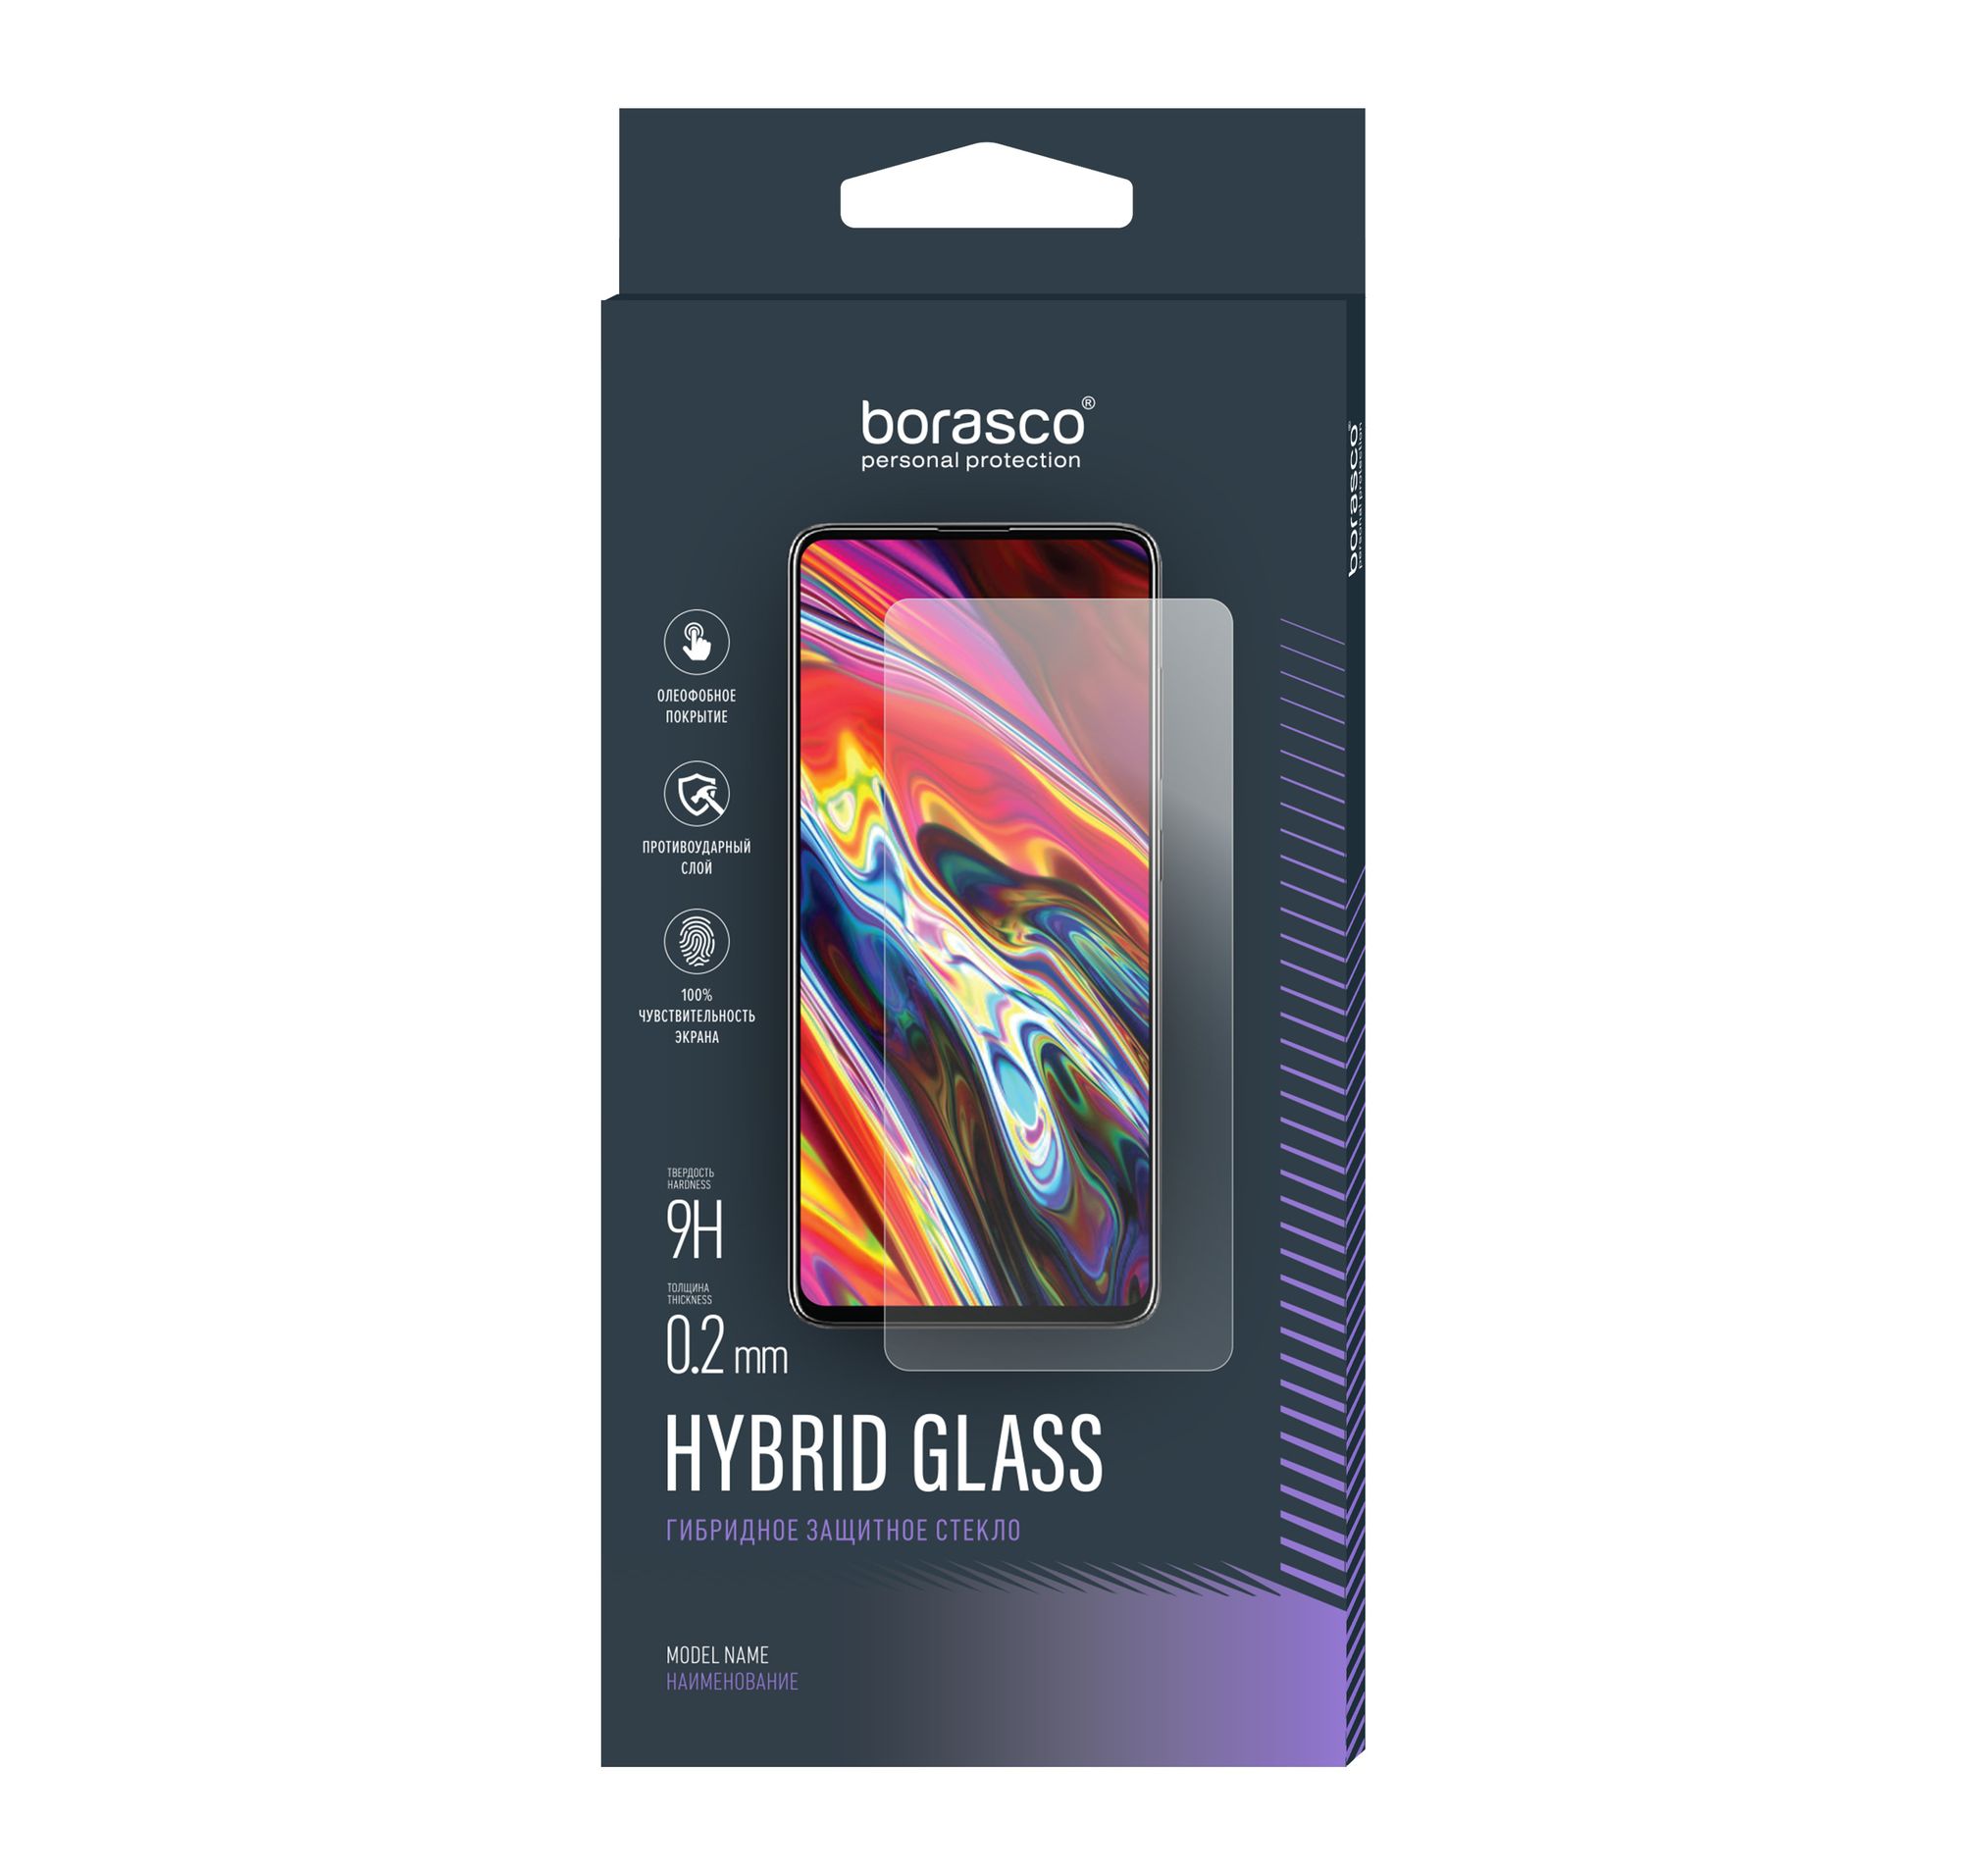 Стекло защитное Hybrid Glass VSP 0,26 мм для Sony Xperia XA1 Ultra Dual защитное стекло для htc desire 516 dual